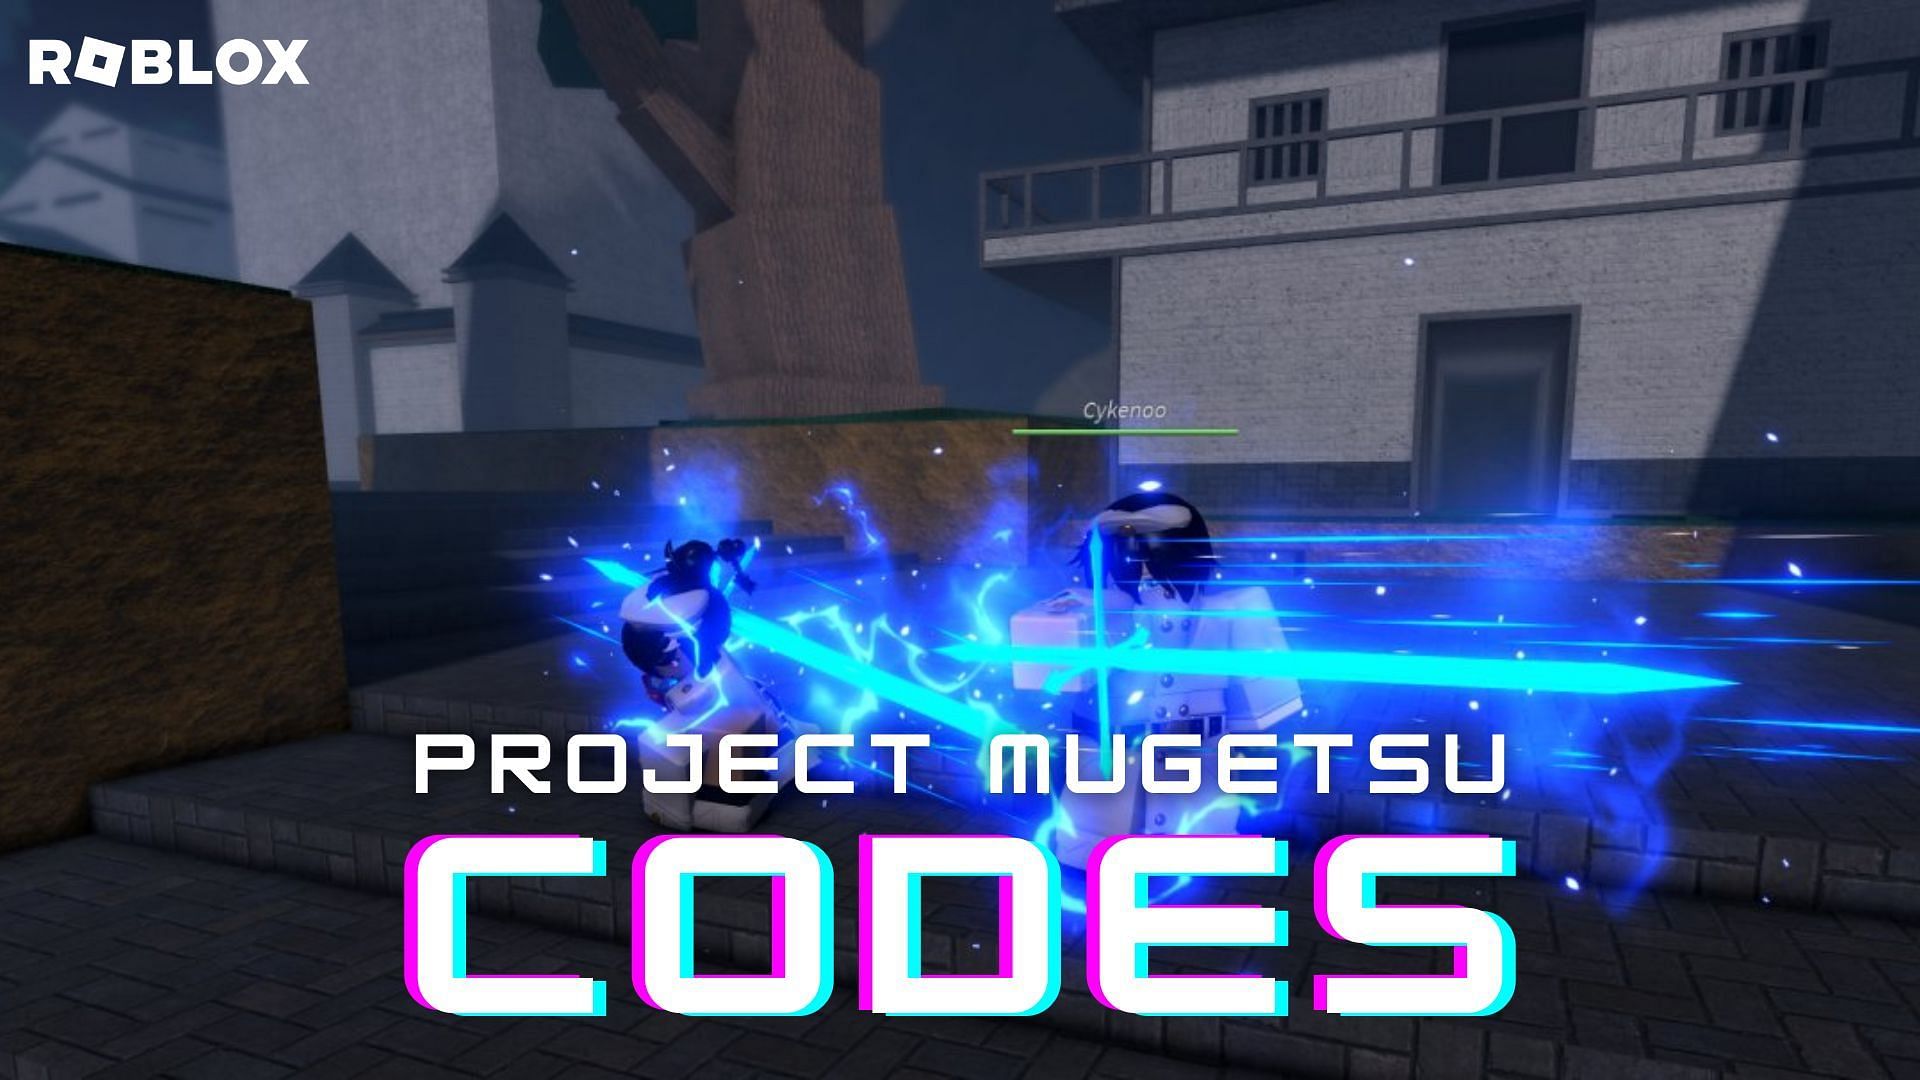 Project Mugetsu latest codes